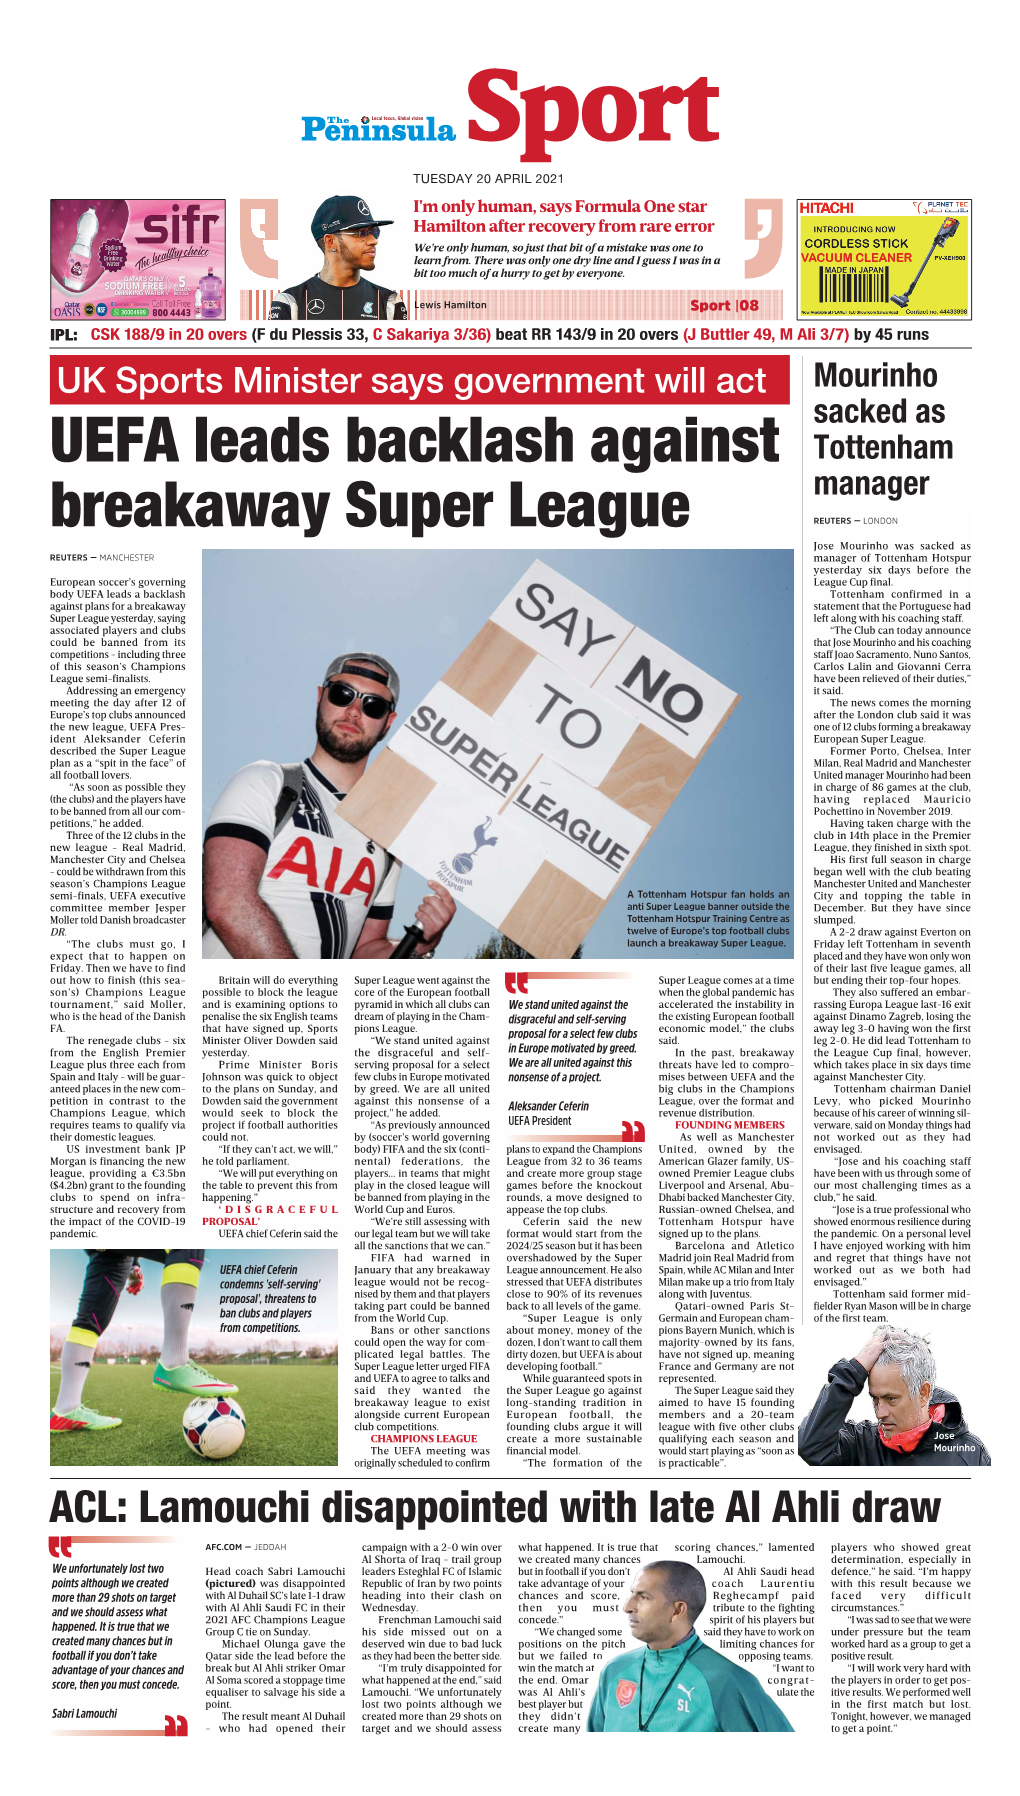 UEFA Leads Backlash Against Breakaway Super League